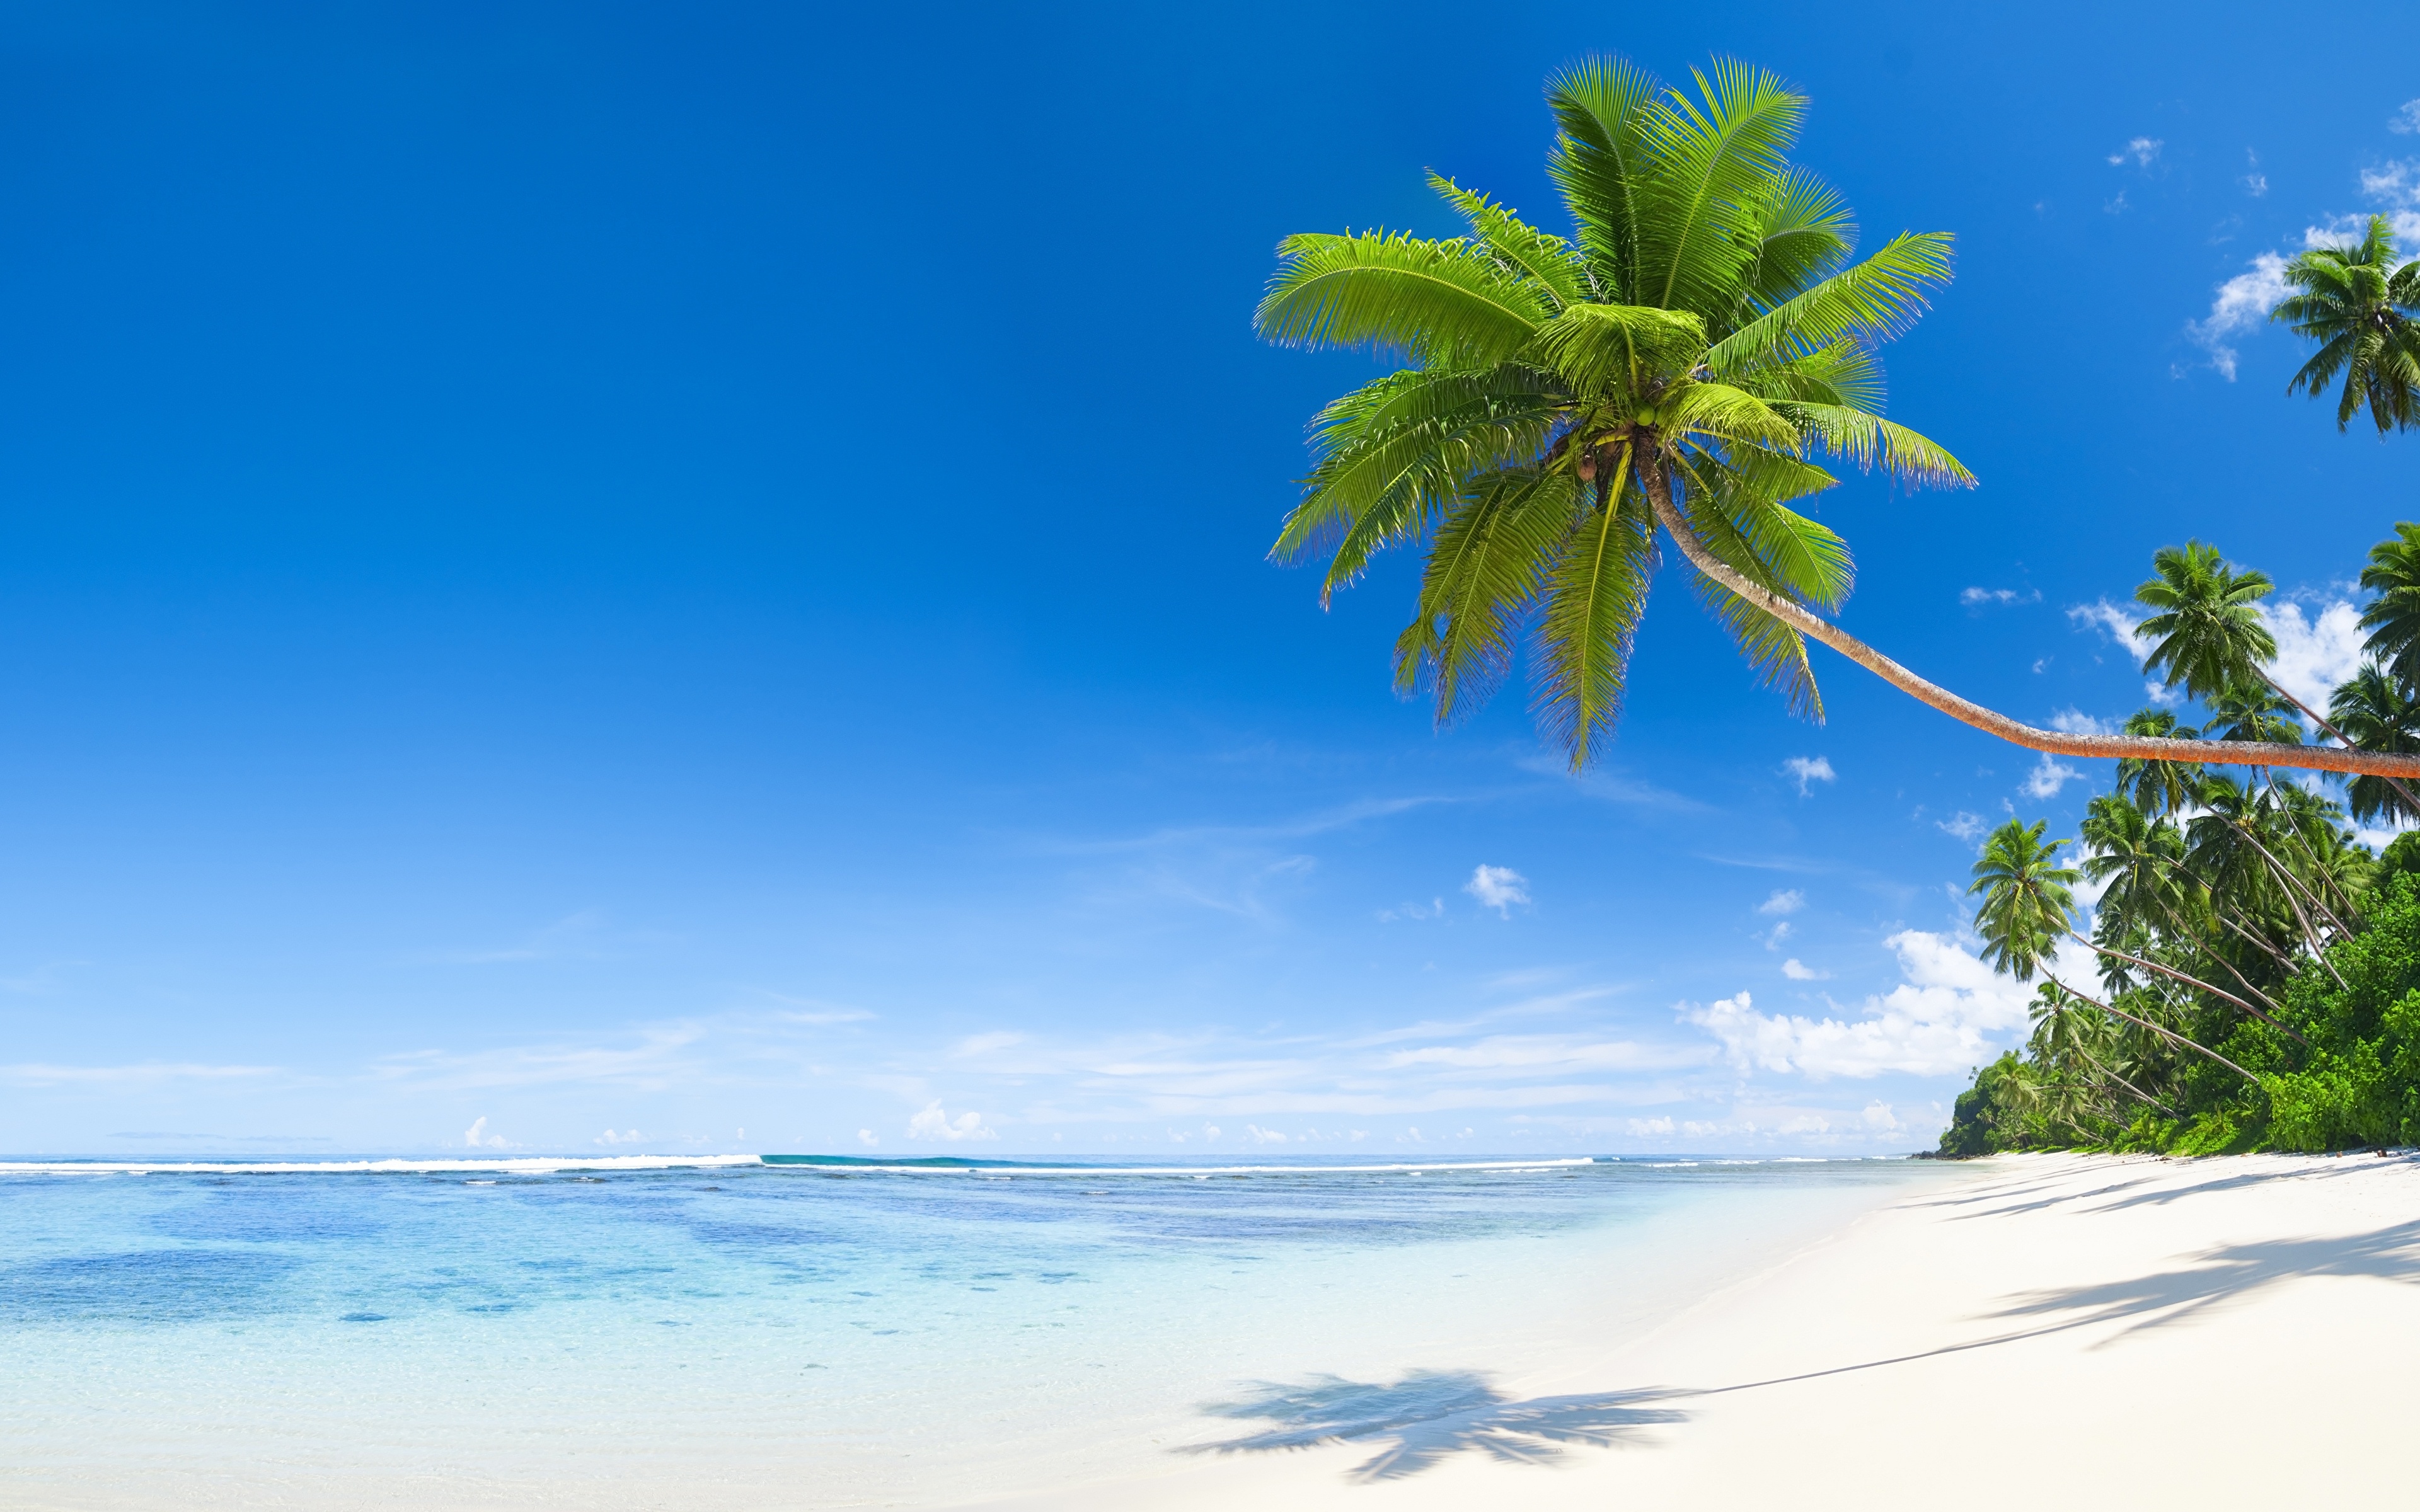 Wallpaper Beach Sea Nature Sky Tropics Palm Trees 3840x2400